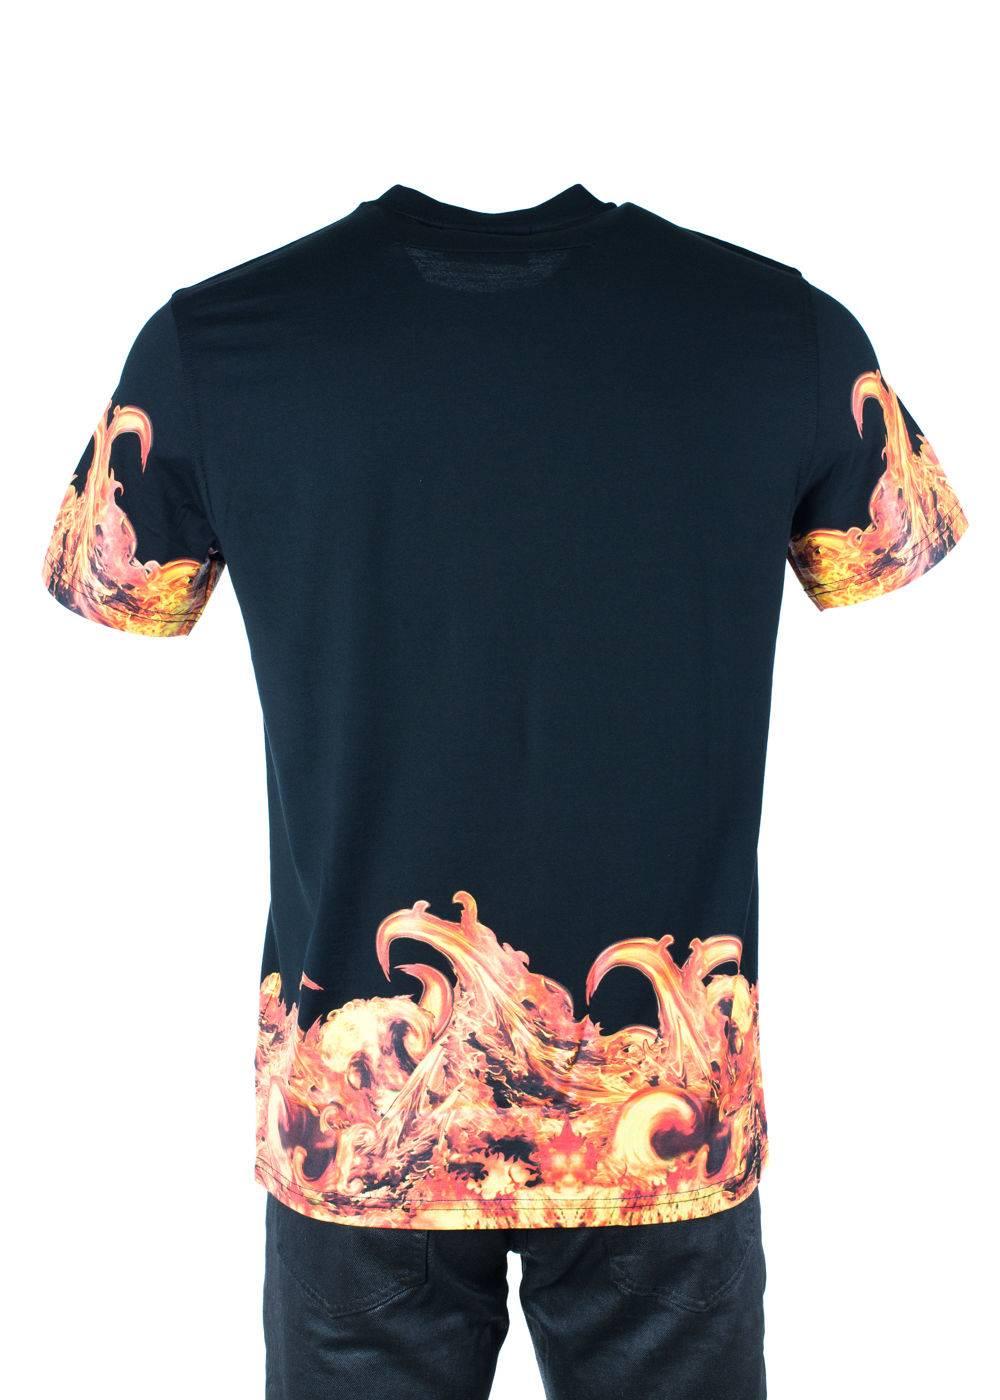 black flame shirt